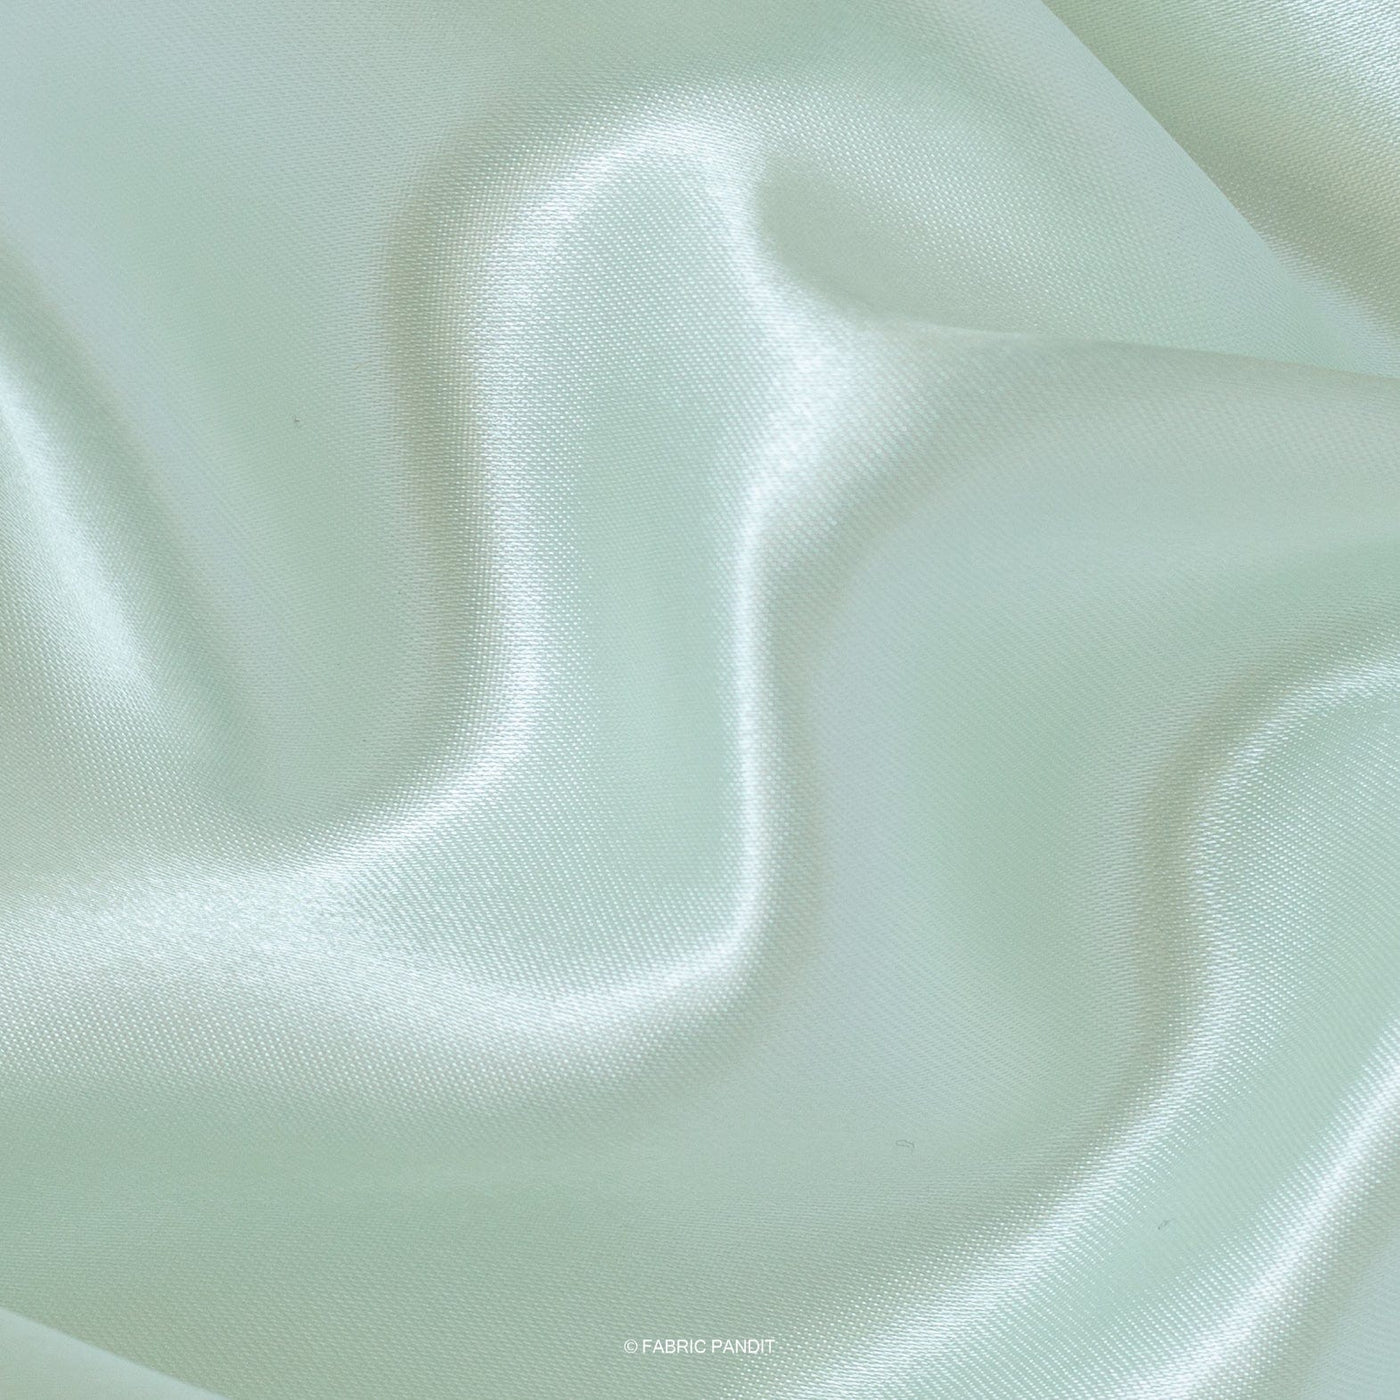 Fabric Pandit Fabric Mint Green Plain Premium Ultra Satin Fabric (Width 44 Inches)